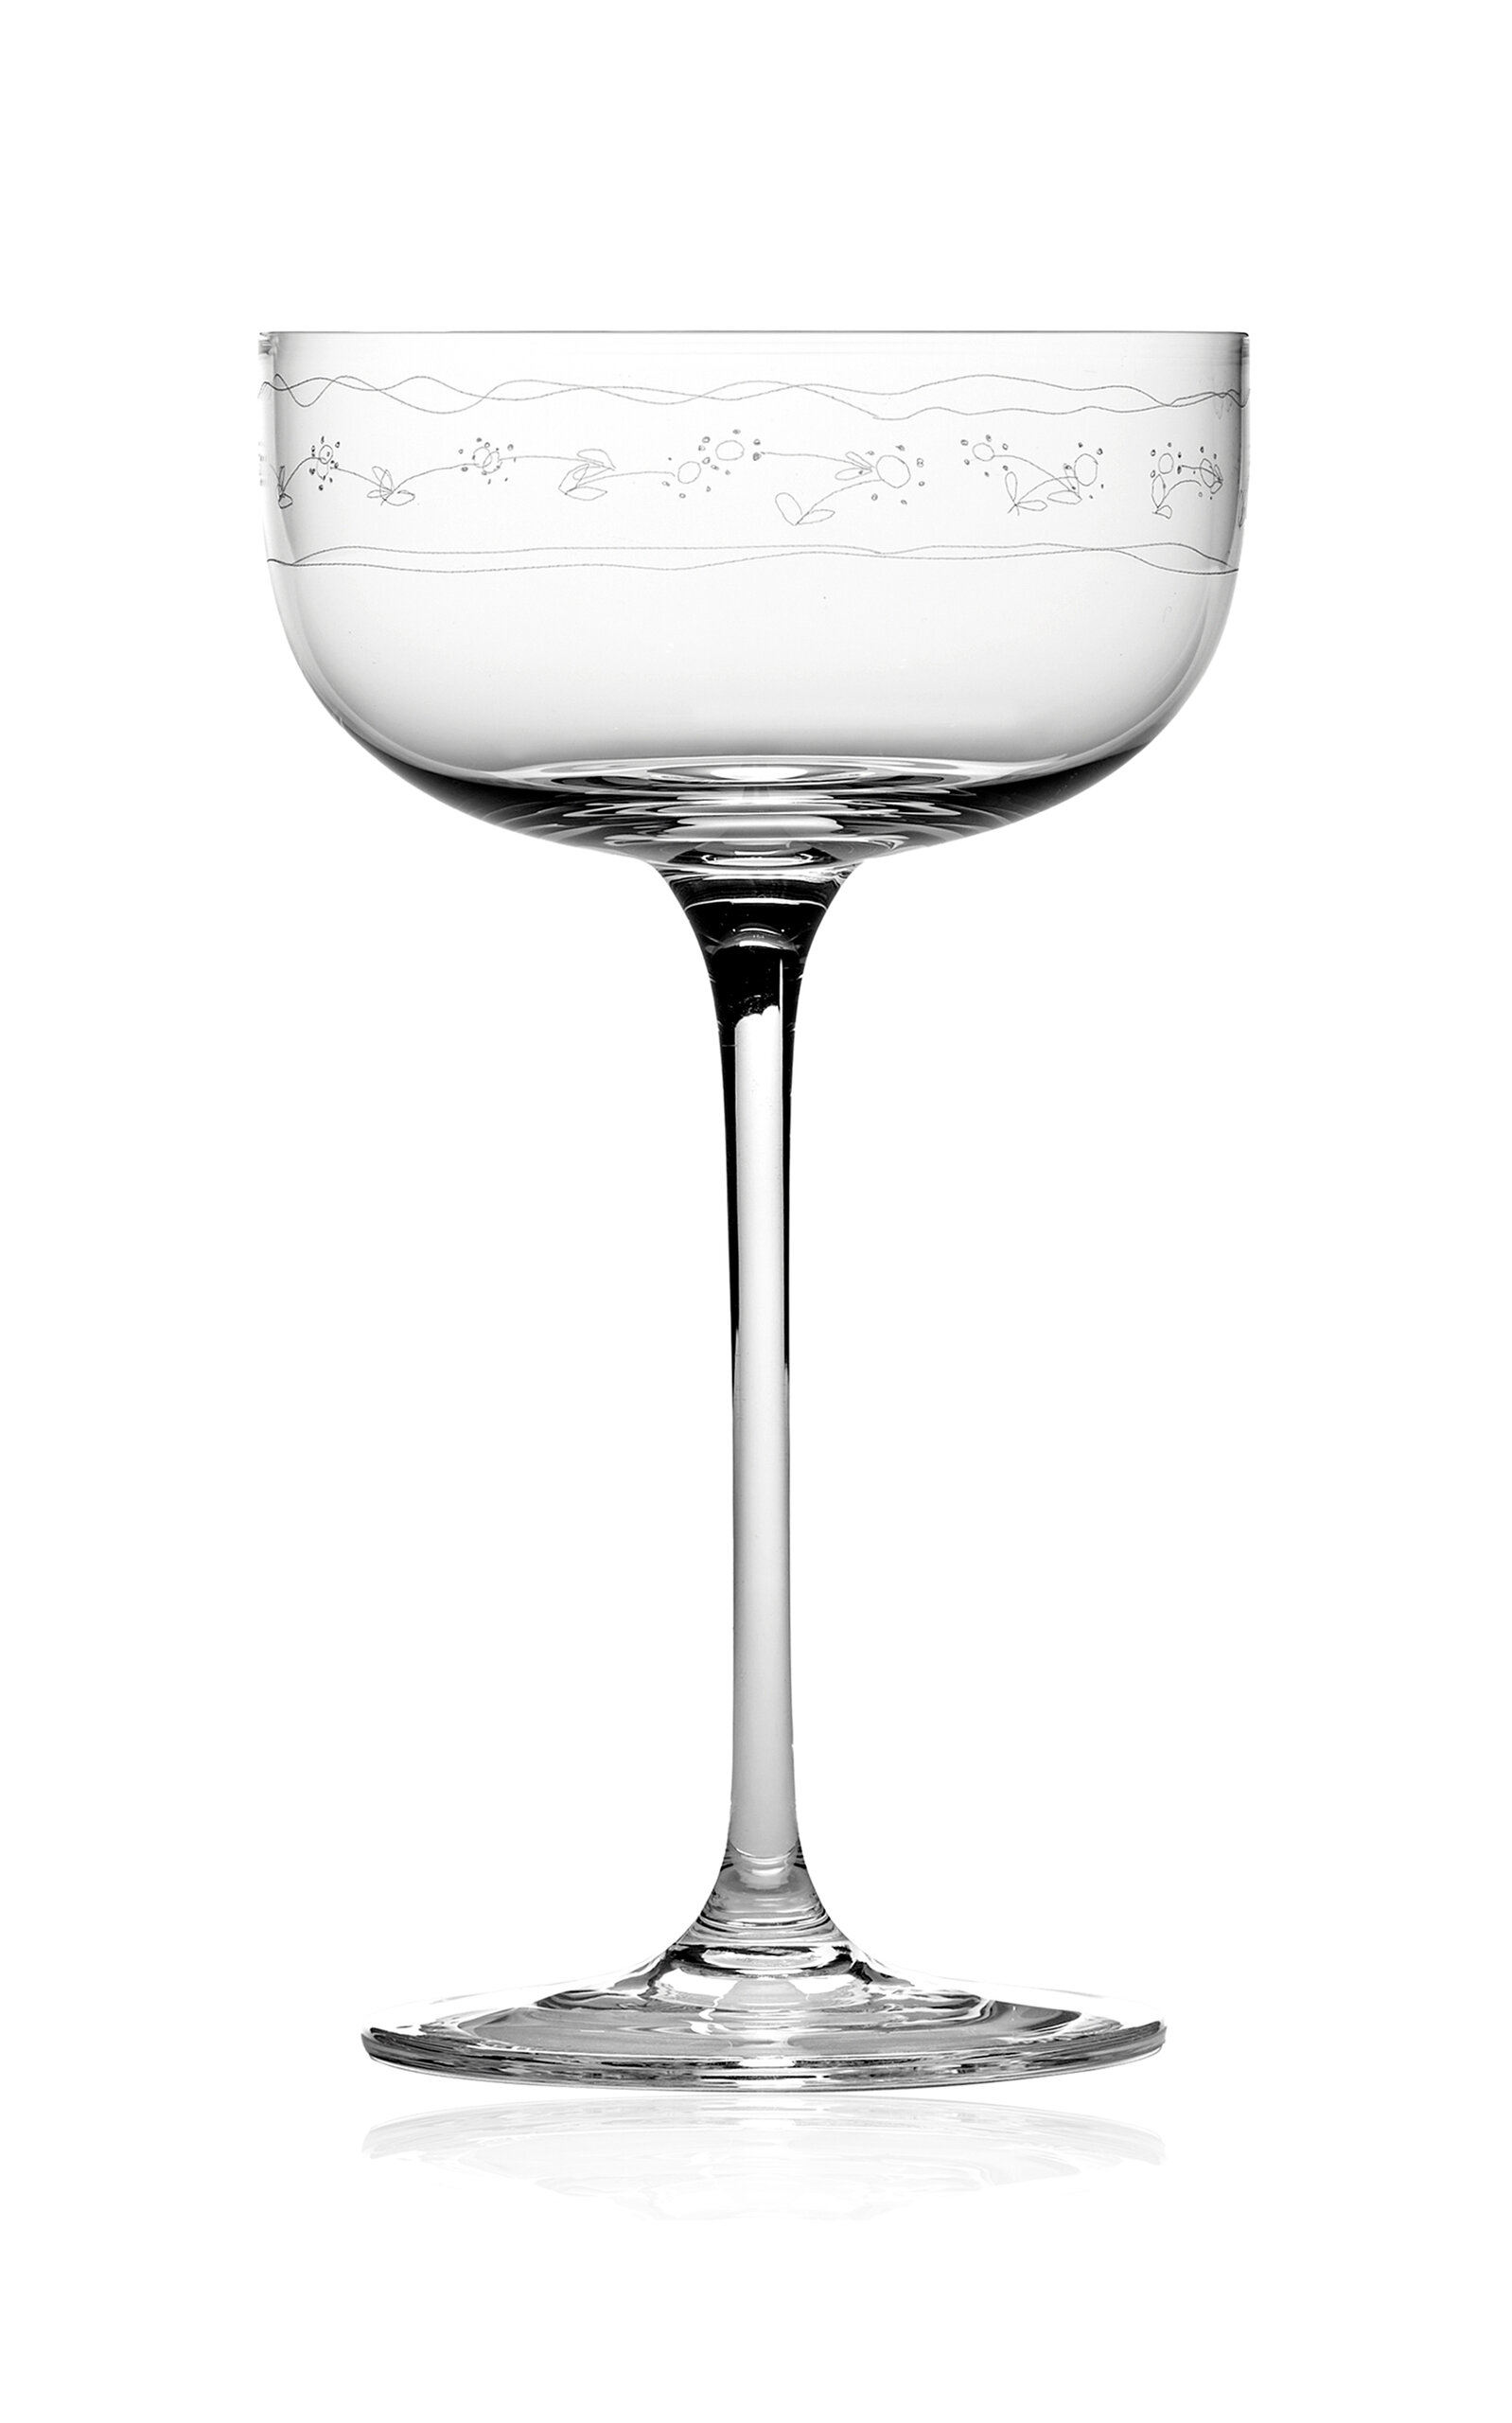 Marni For Serax Serax Marni Midnight Flowers Champagne Coupe Anemone Vaniglia In White